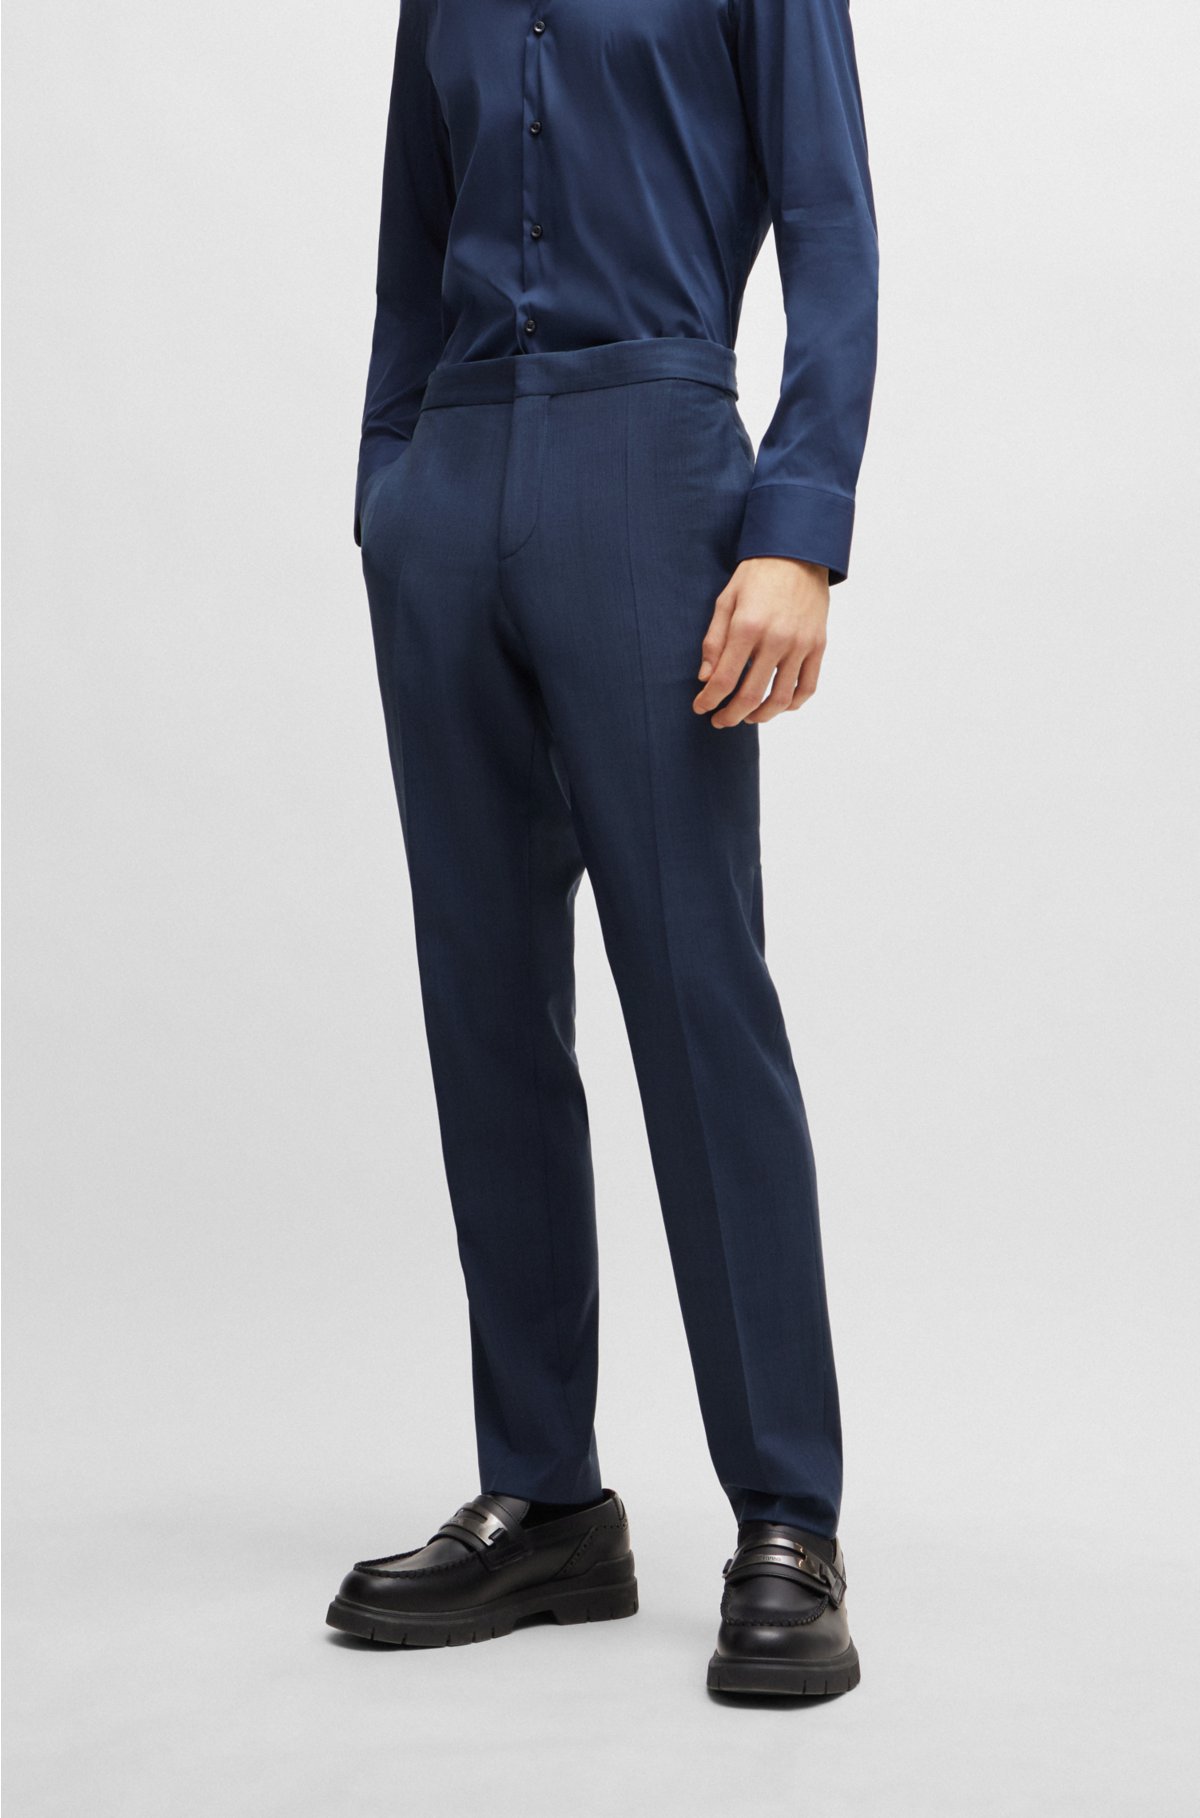 Slim-fit suit in textured fabric, Blue